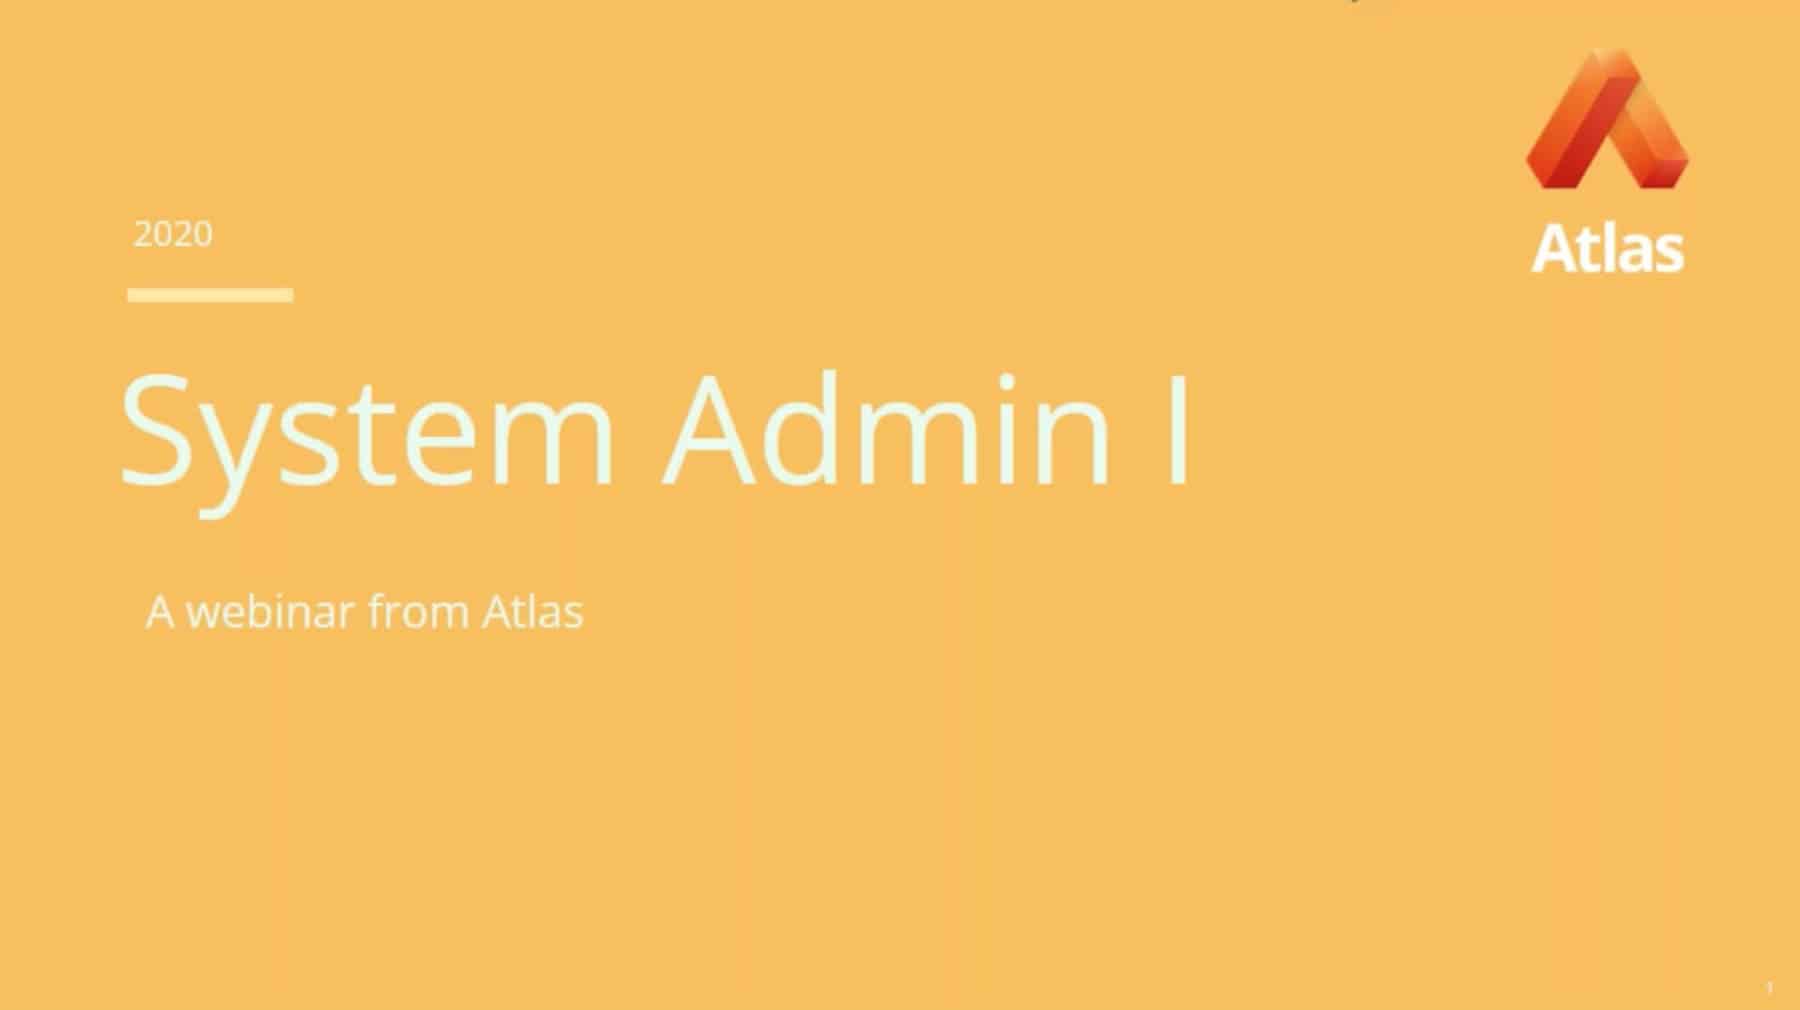 Atlas System Administrator